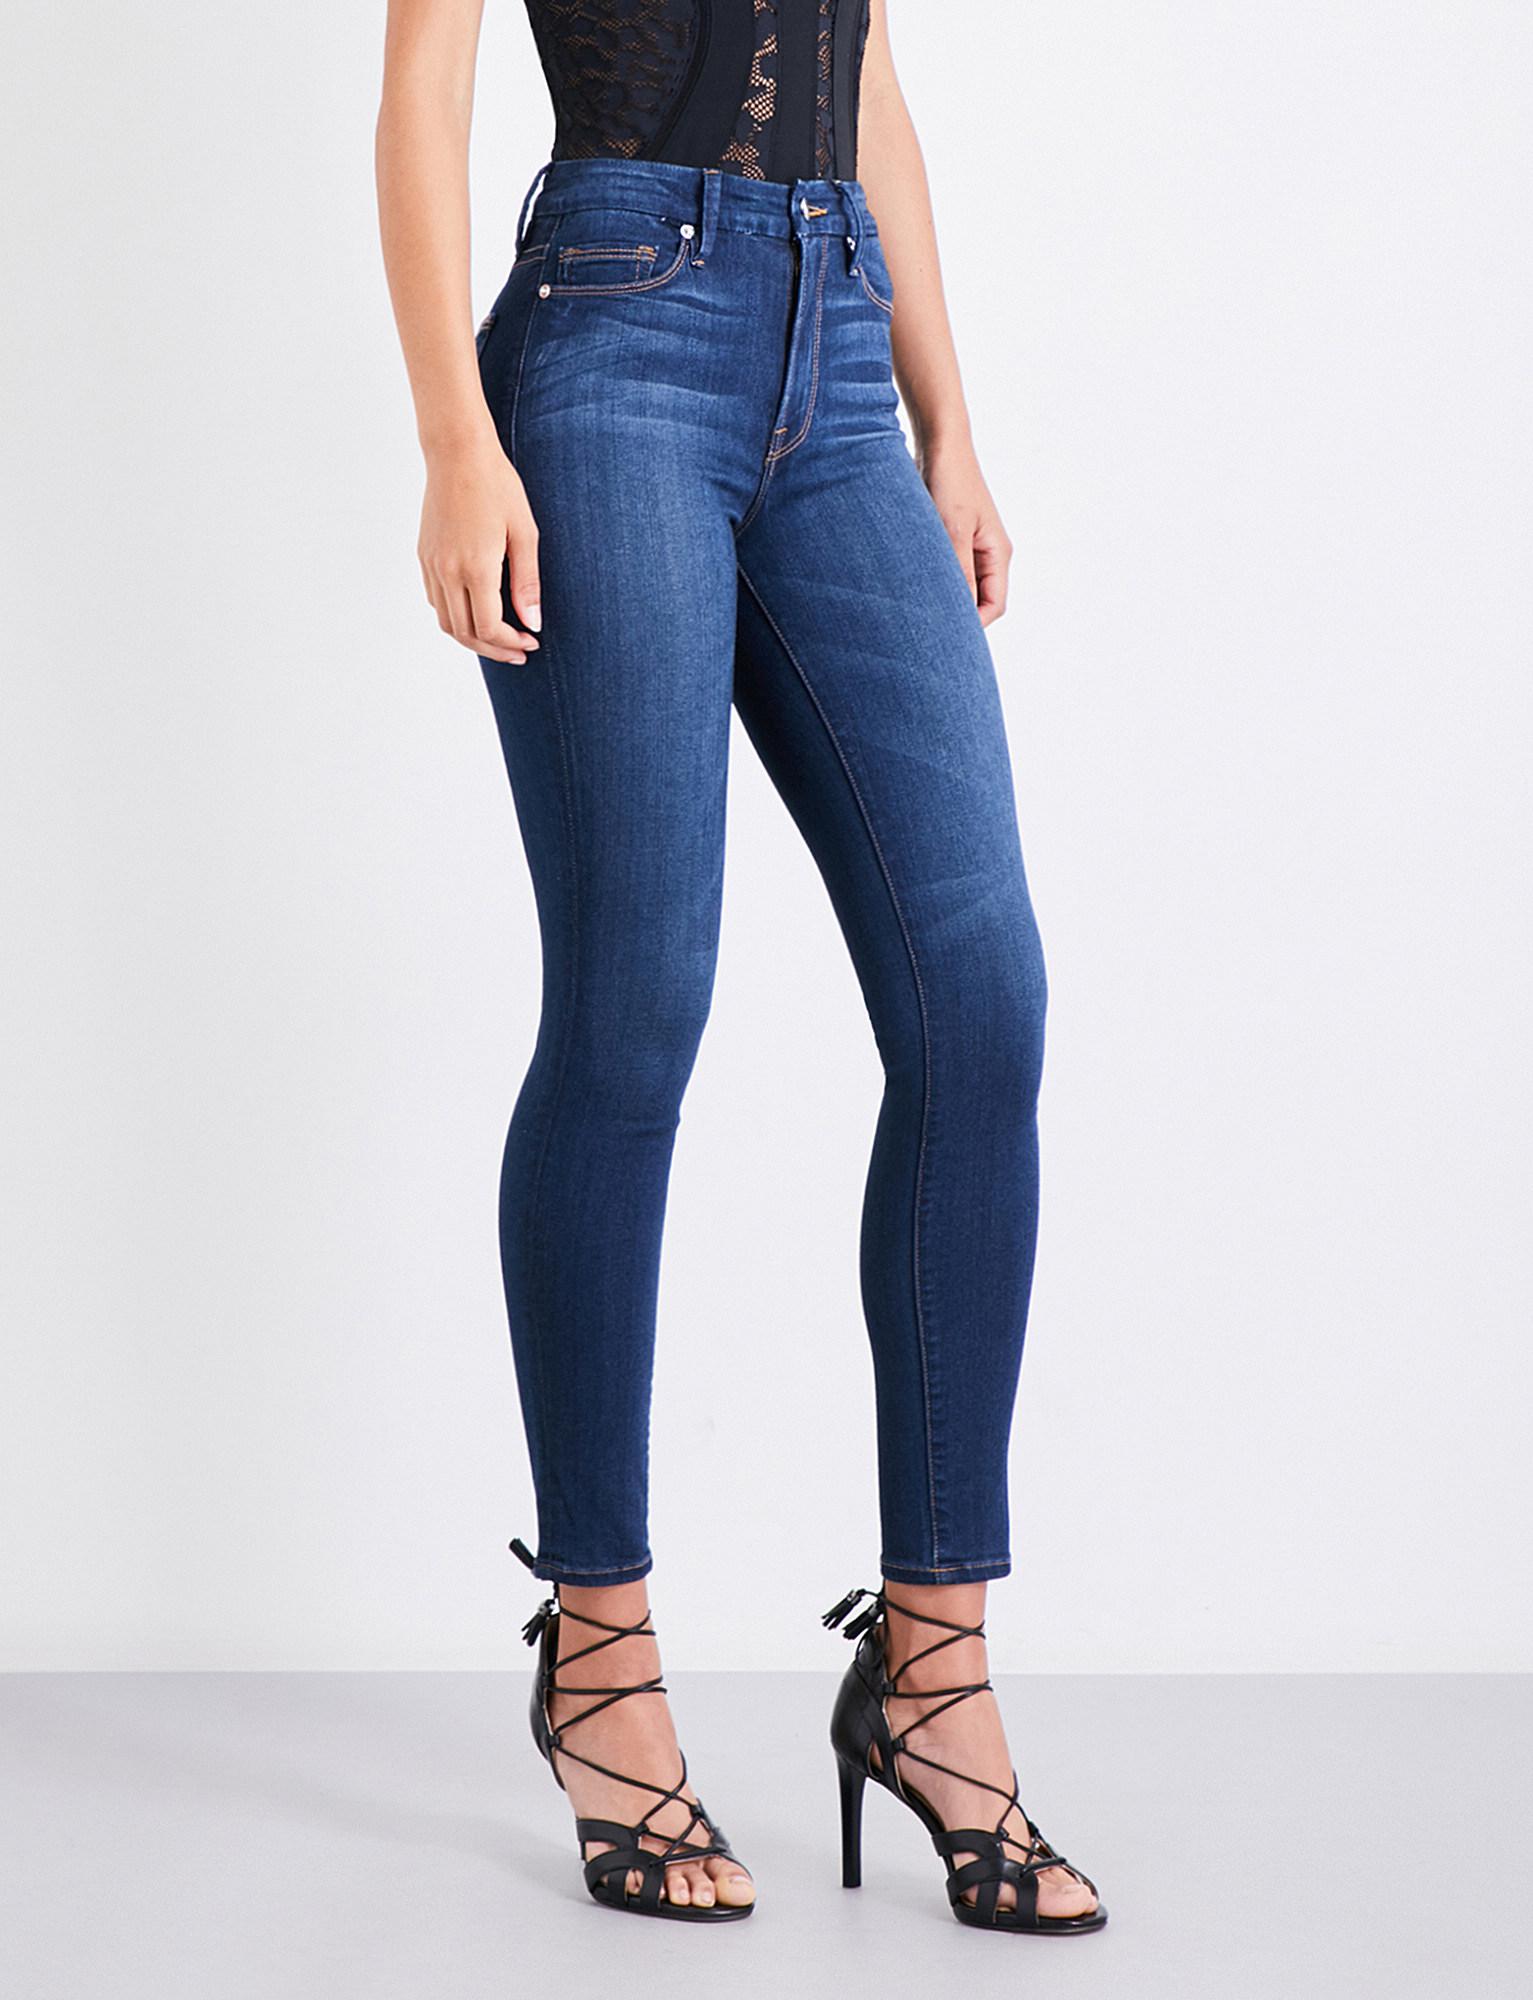 Lyst - Good American Good Waist Skinny Ultra High-rise Jeans in Blue